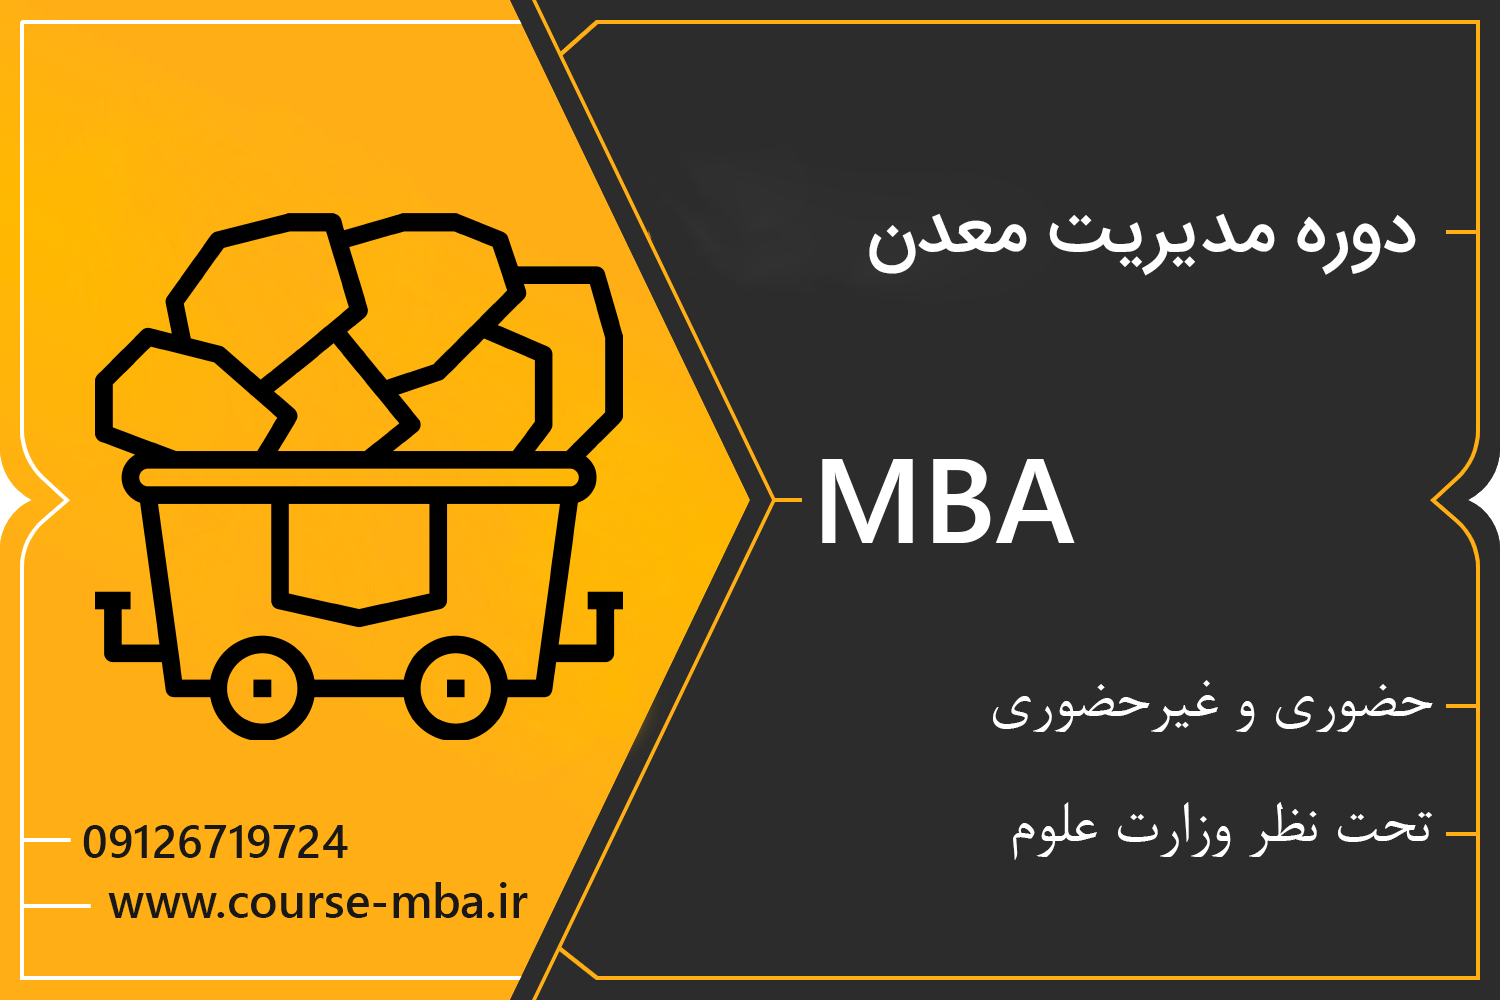 دوره مدیریت معدن | مدرک MBA مدیریت معدن